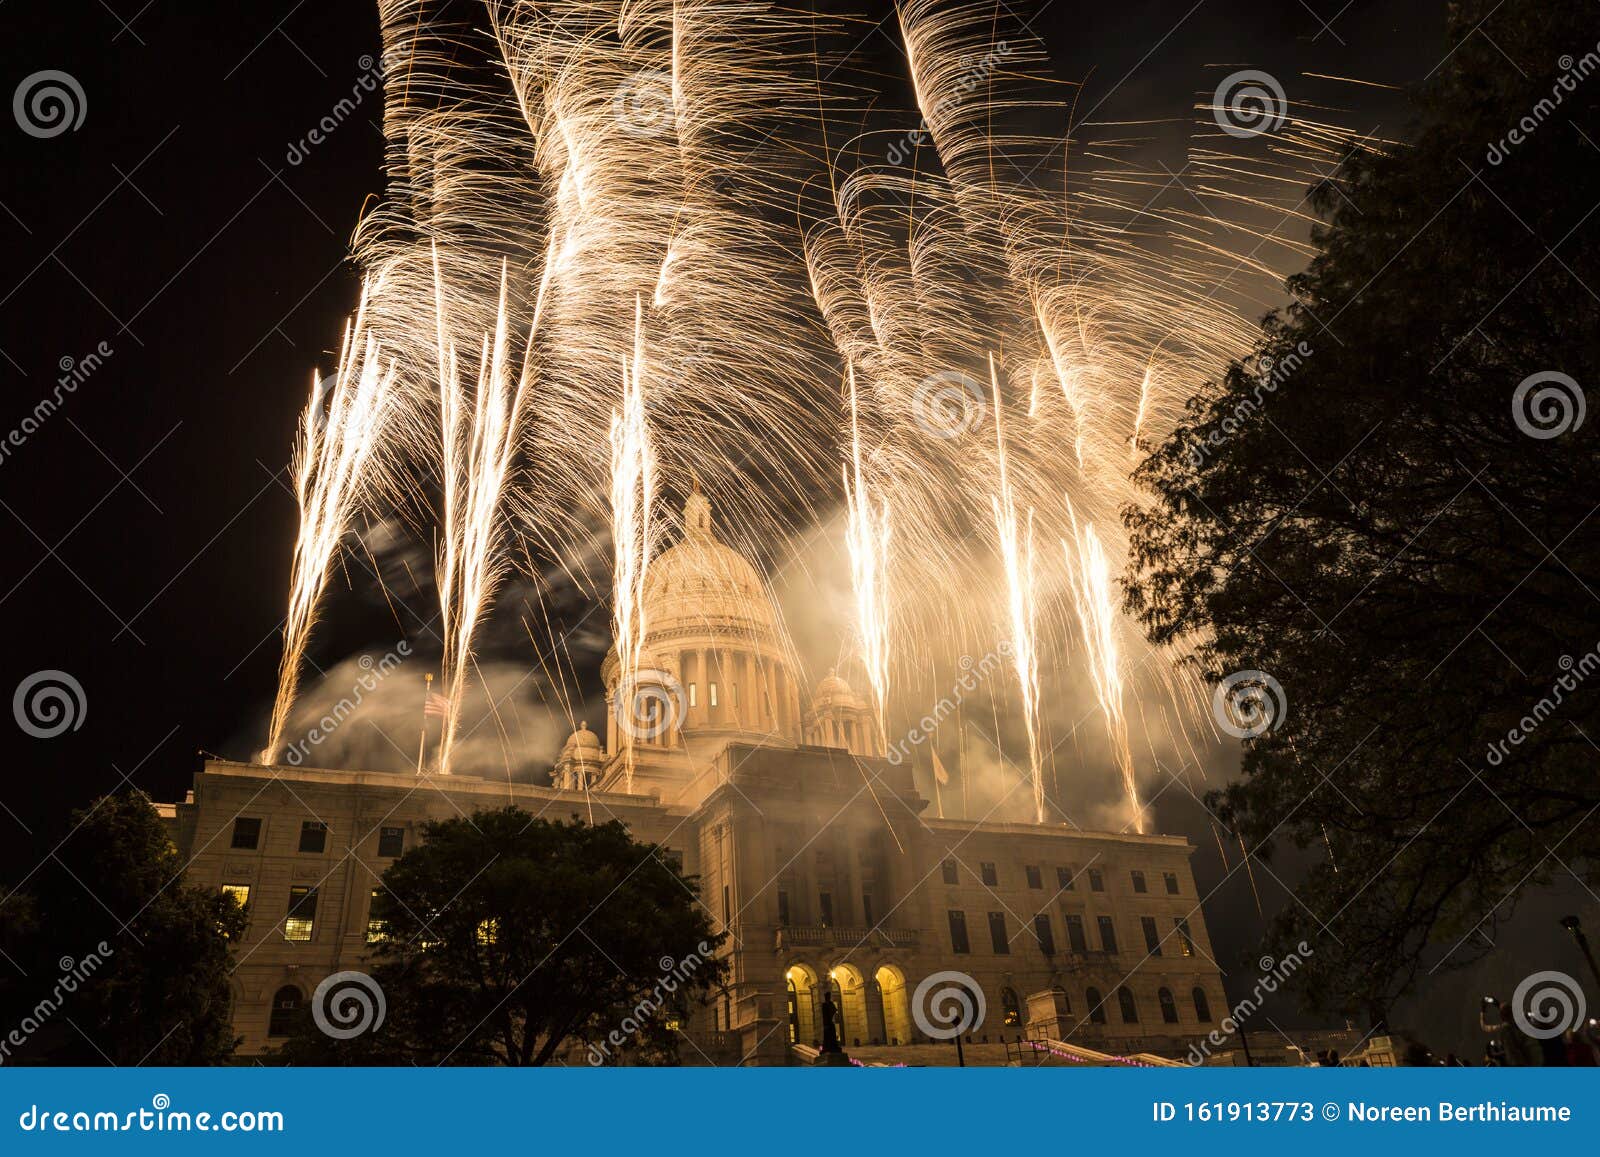 rhode island statehouse with fireworks for gloria gemma waterfire